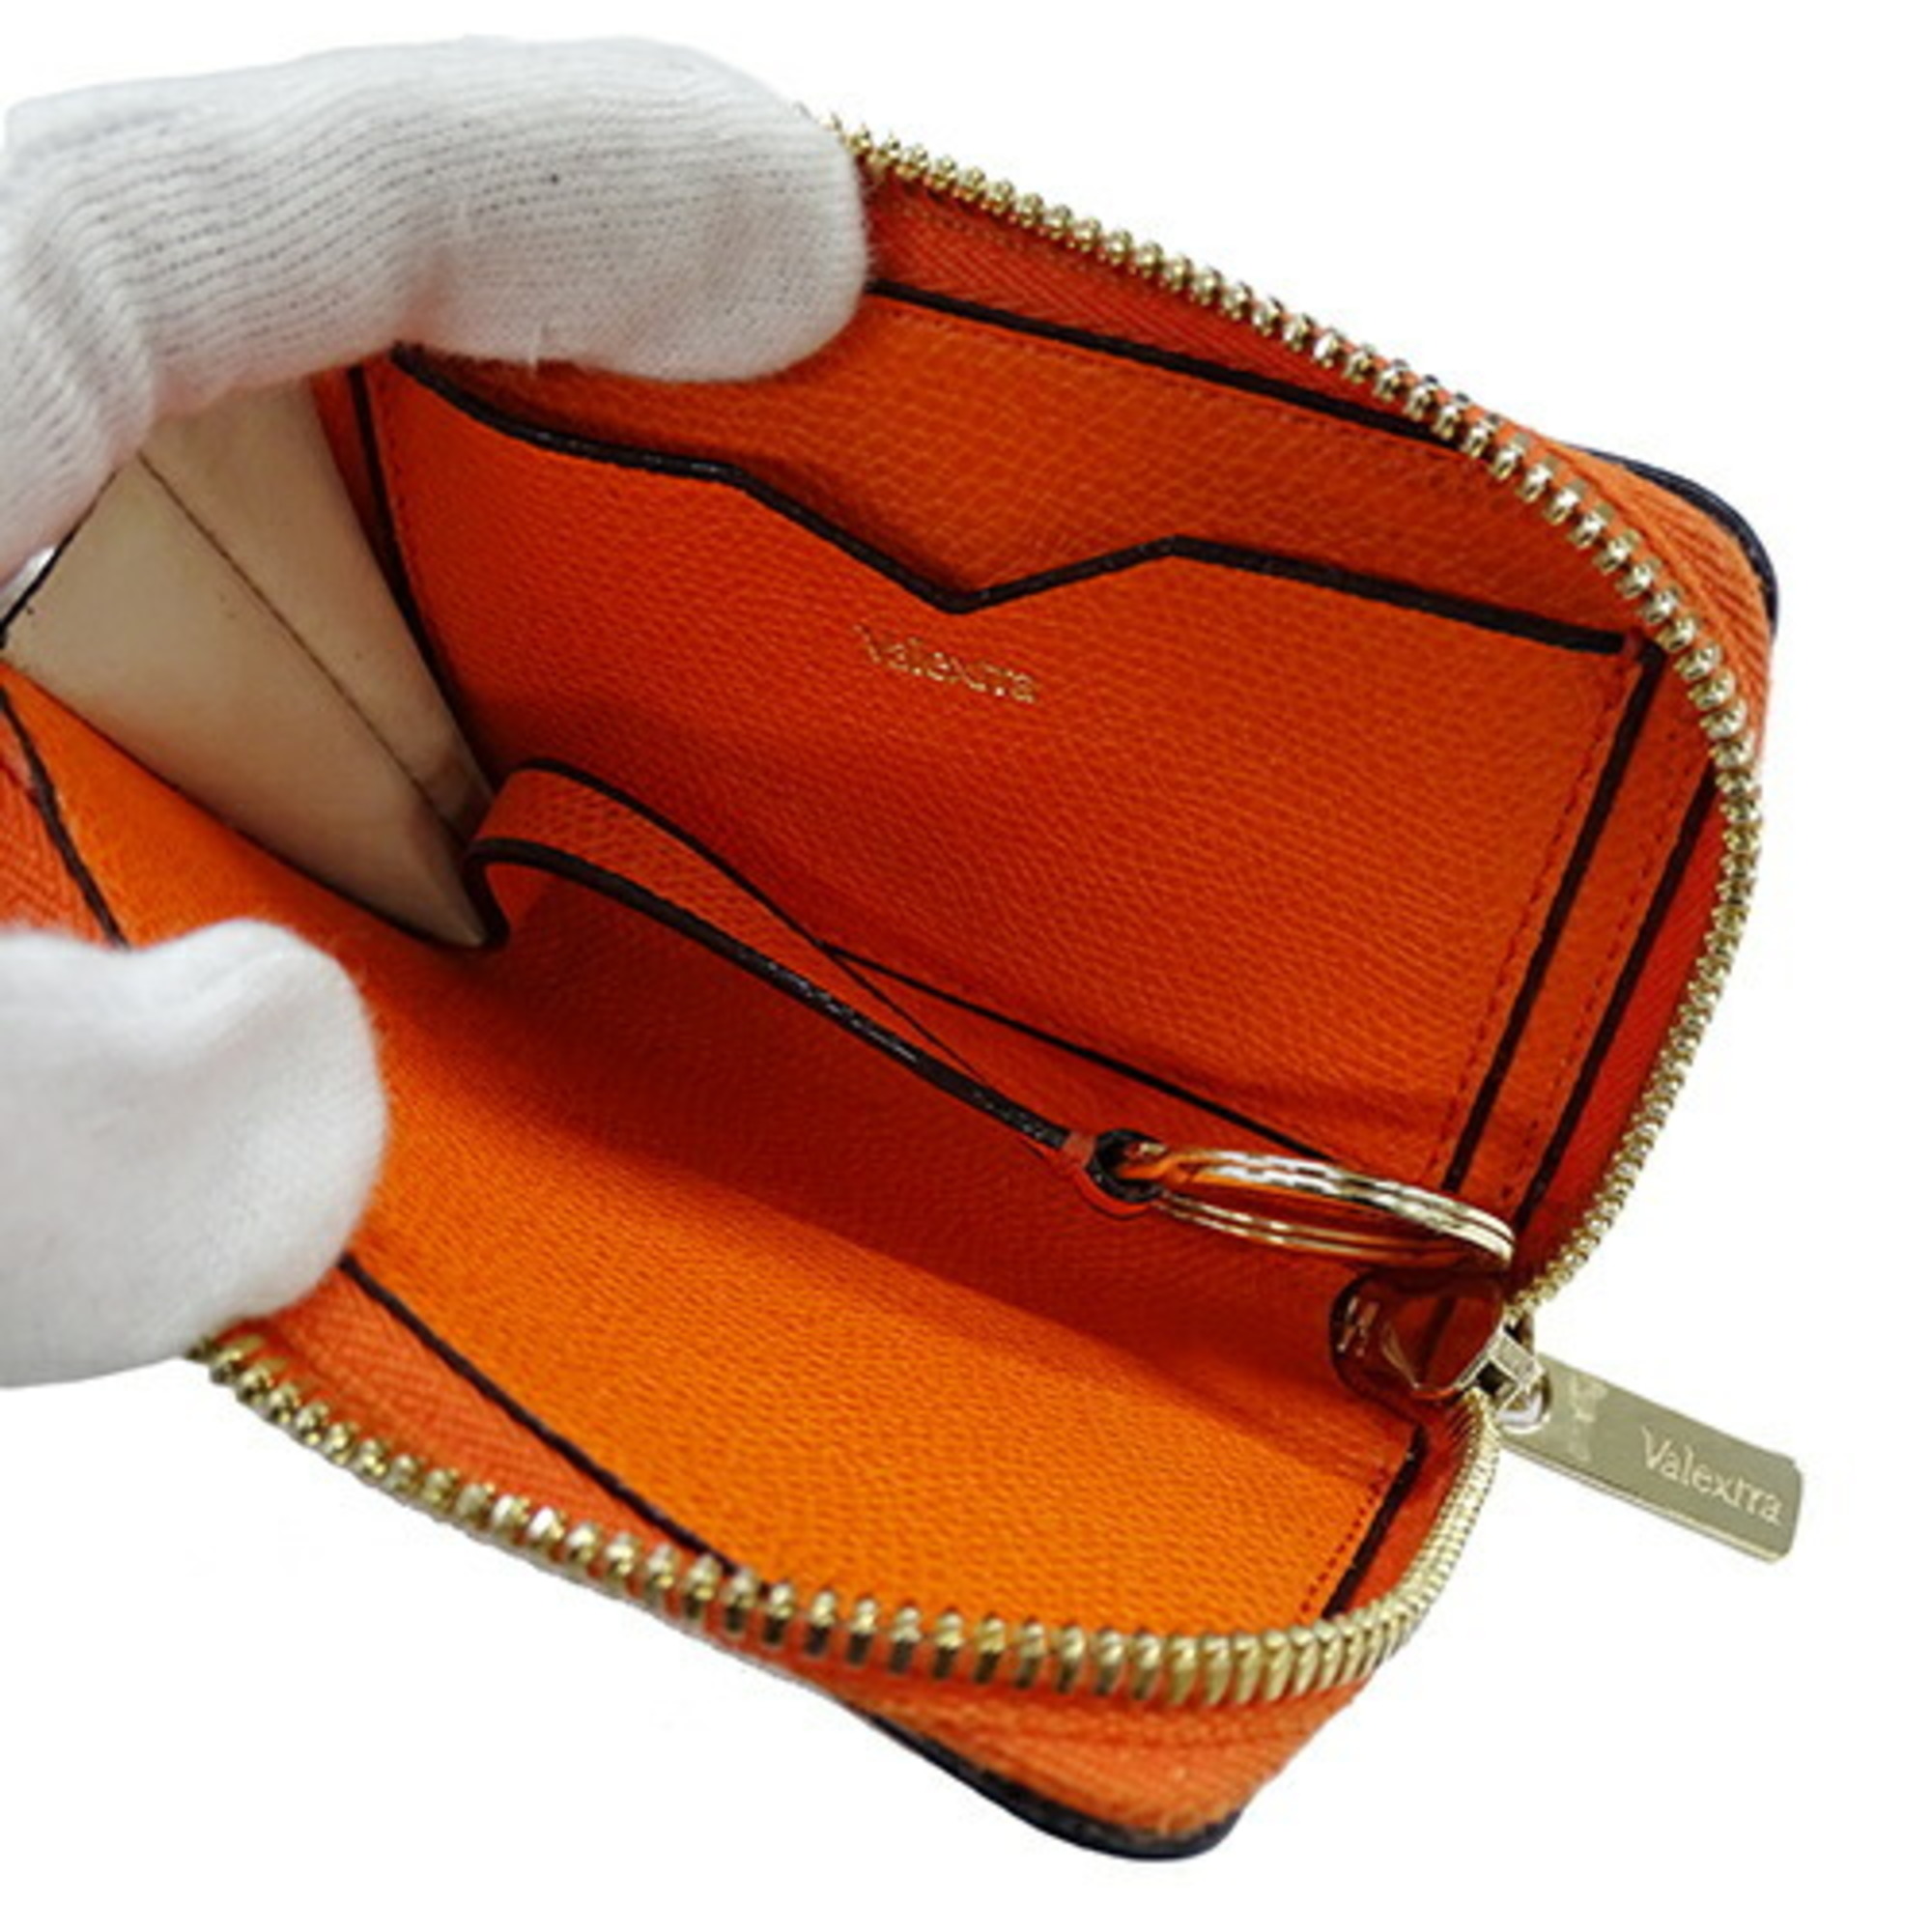 Valextra Women's Key Case, Coin Purse, Leather, Zip Holder, Orange, Compact